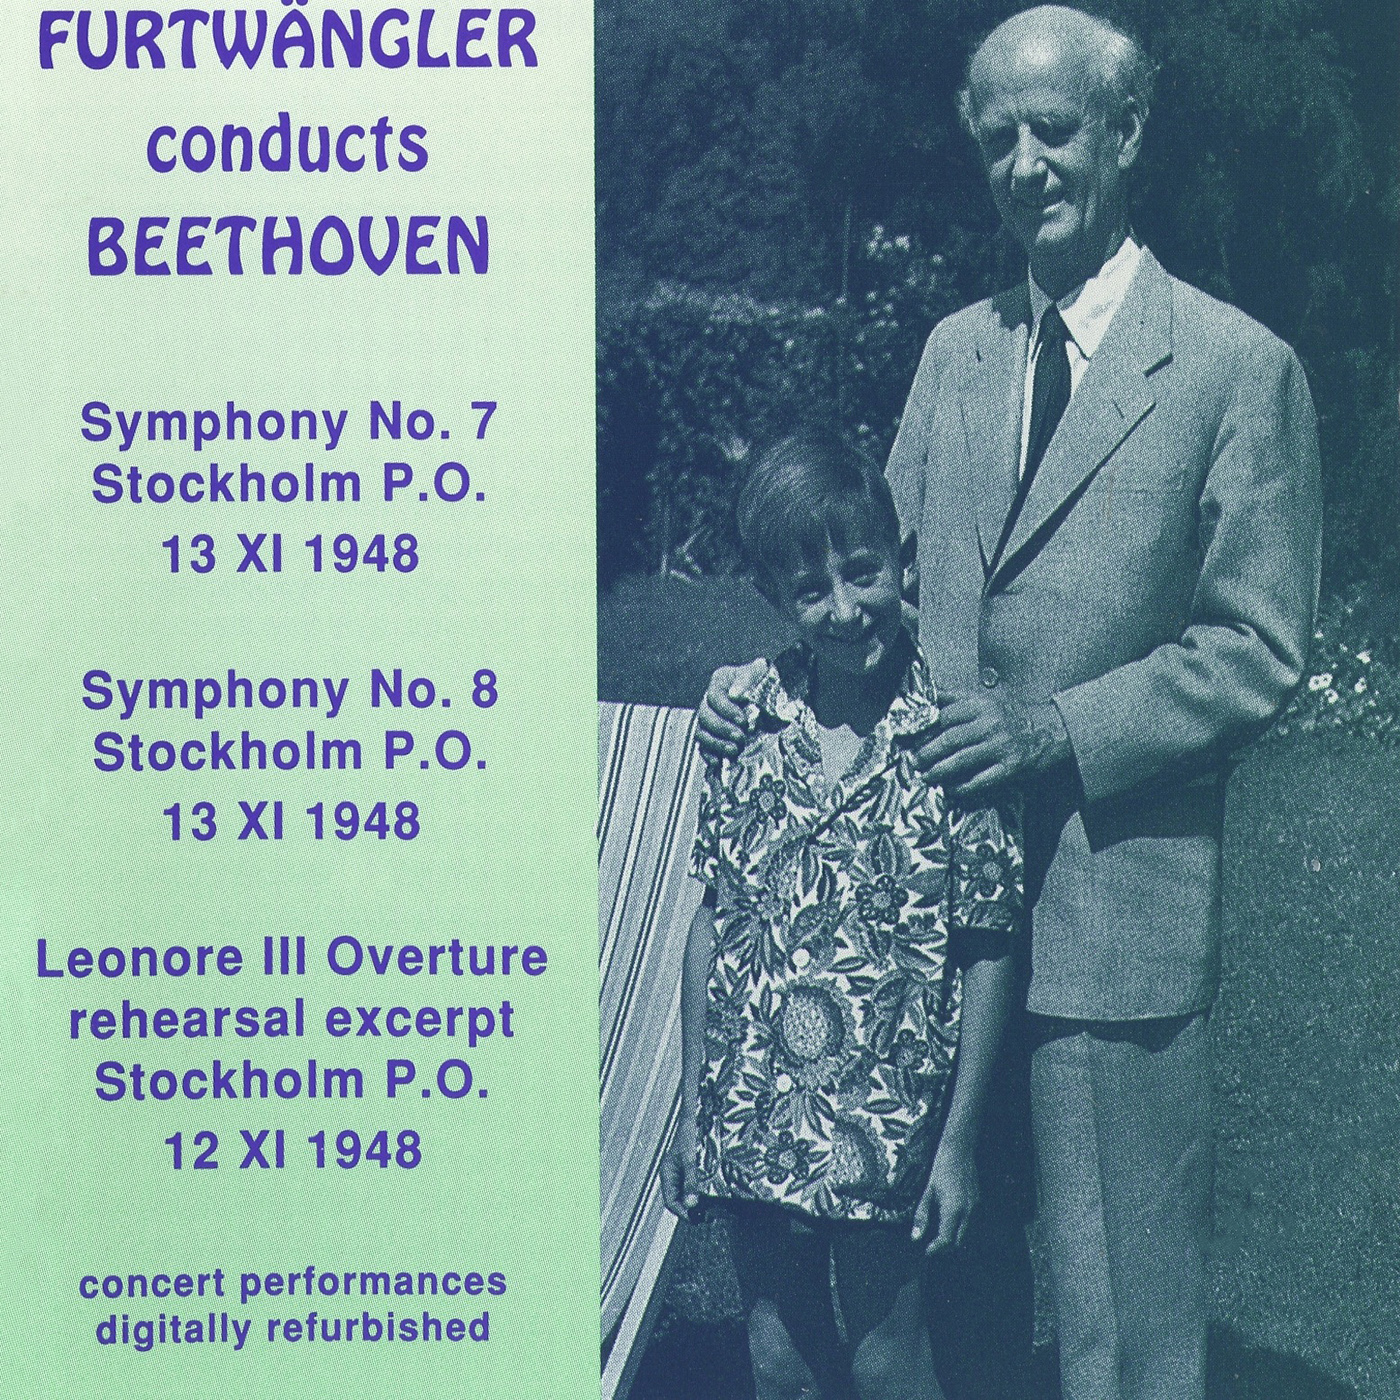 BEETHOVEN, L. van: Symphonies Nos. 7 and 8 (Stockholm Philharmonic, Furtwangler) (1948)